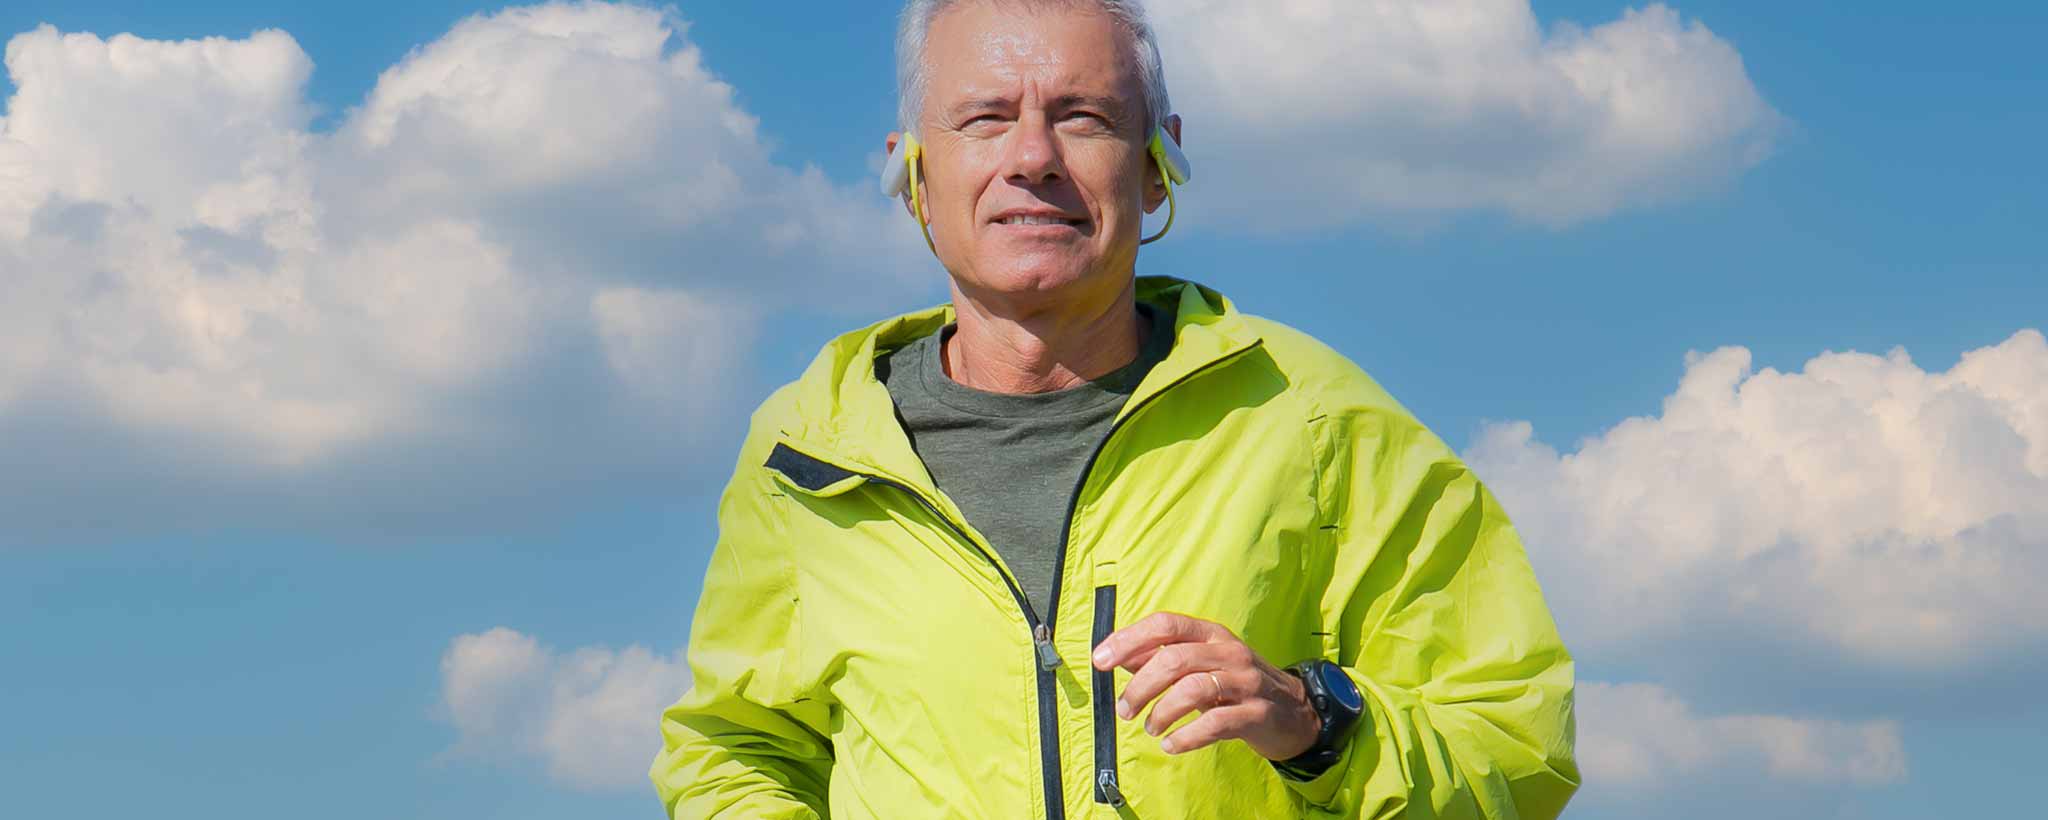 'Senior man jogging for good health'